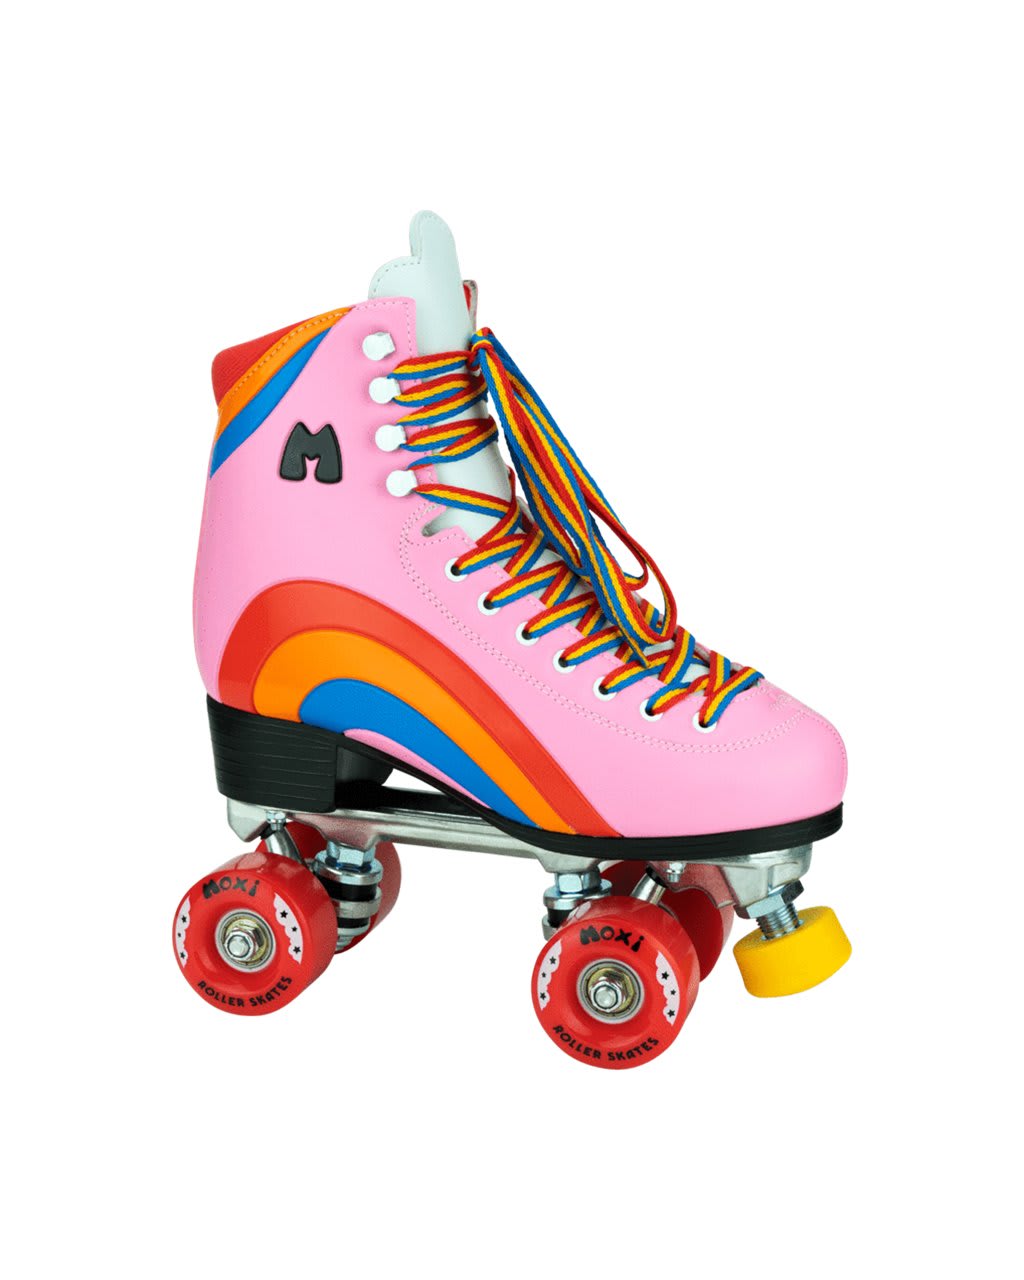 Premium Shiny Roller Skates for Adult Women Men Four-Wheel Roller Skates for Teens and Youth NIKINER Skates Women's Classic Roller Skates 